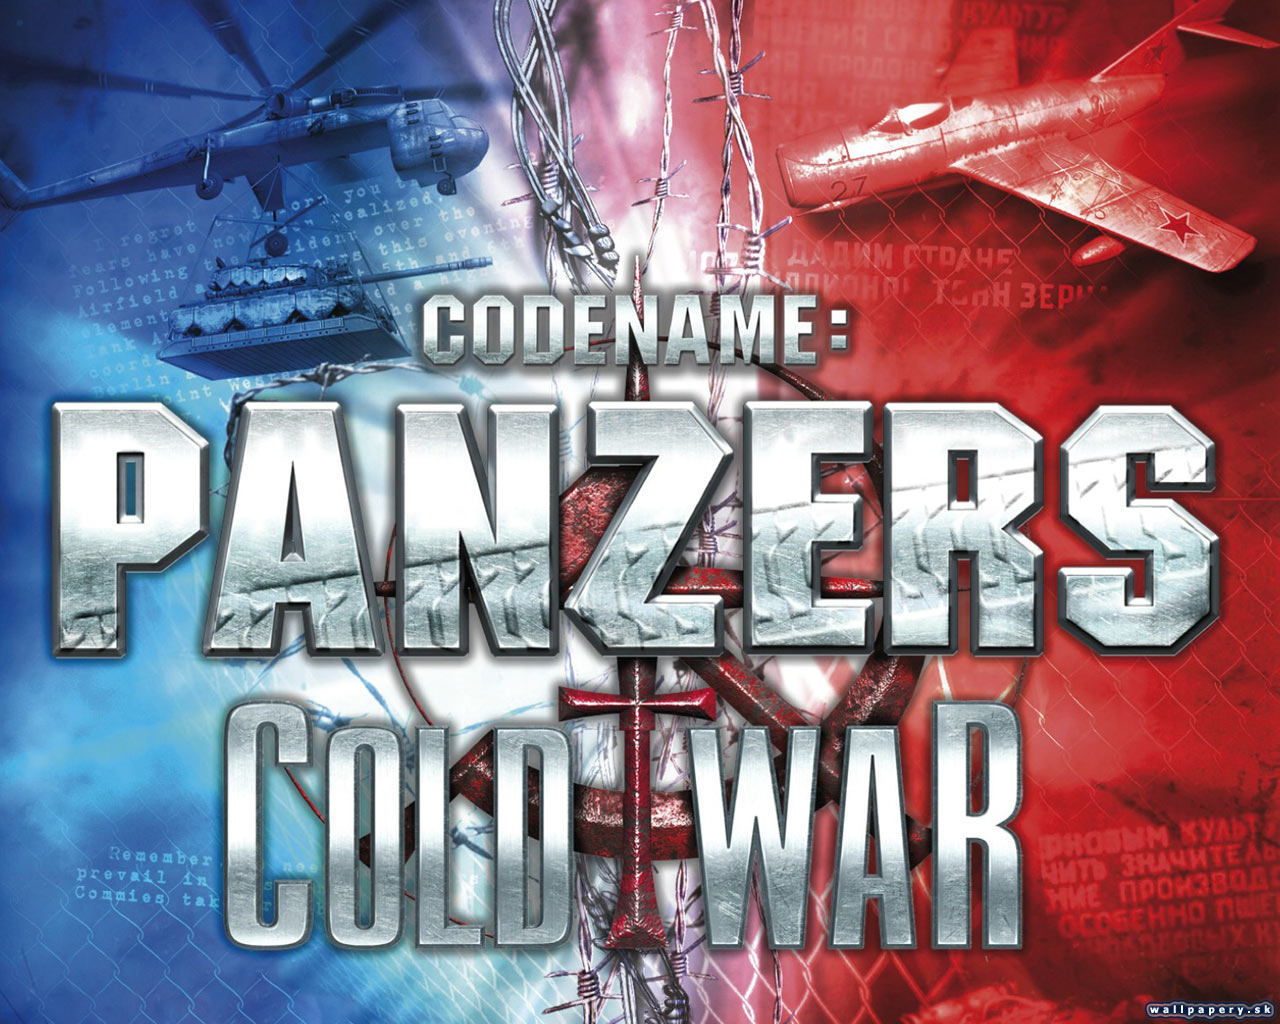 Codename: Panzers - Cold War - wallpaper 3